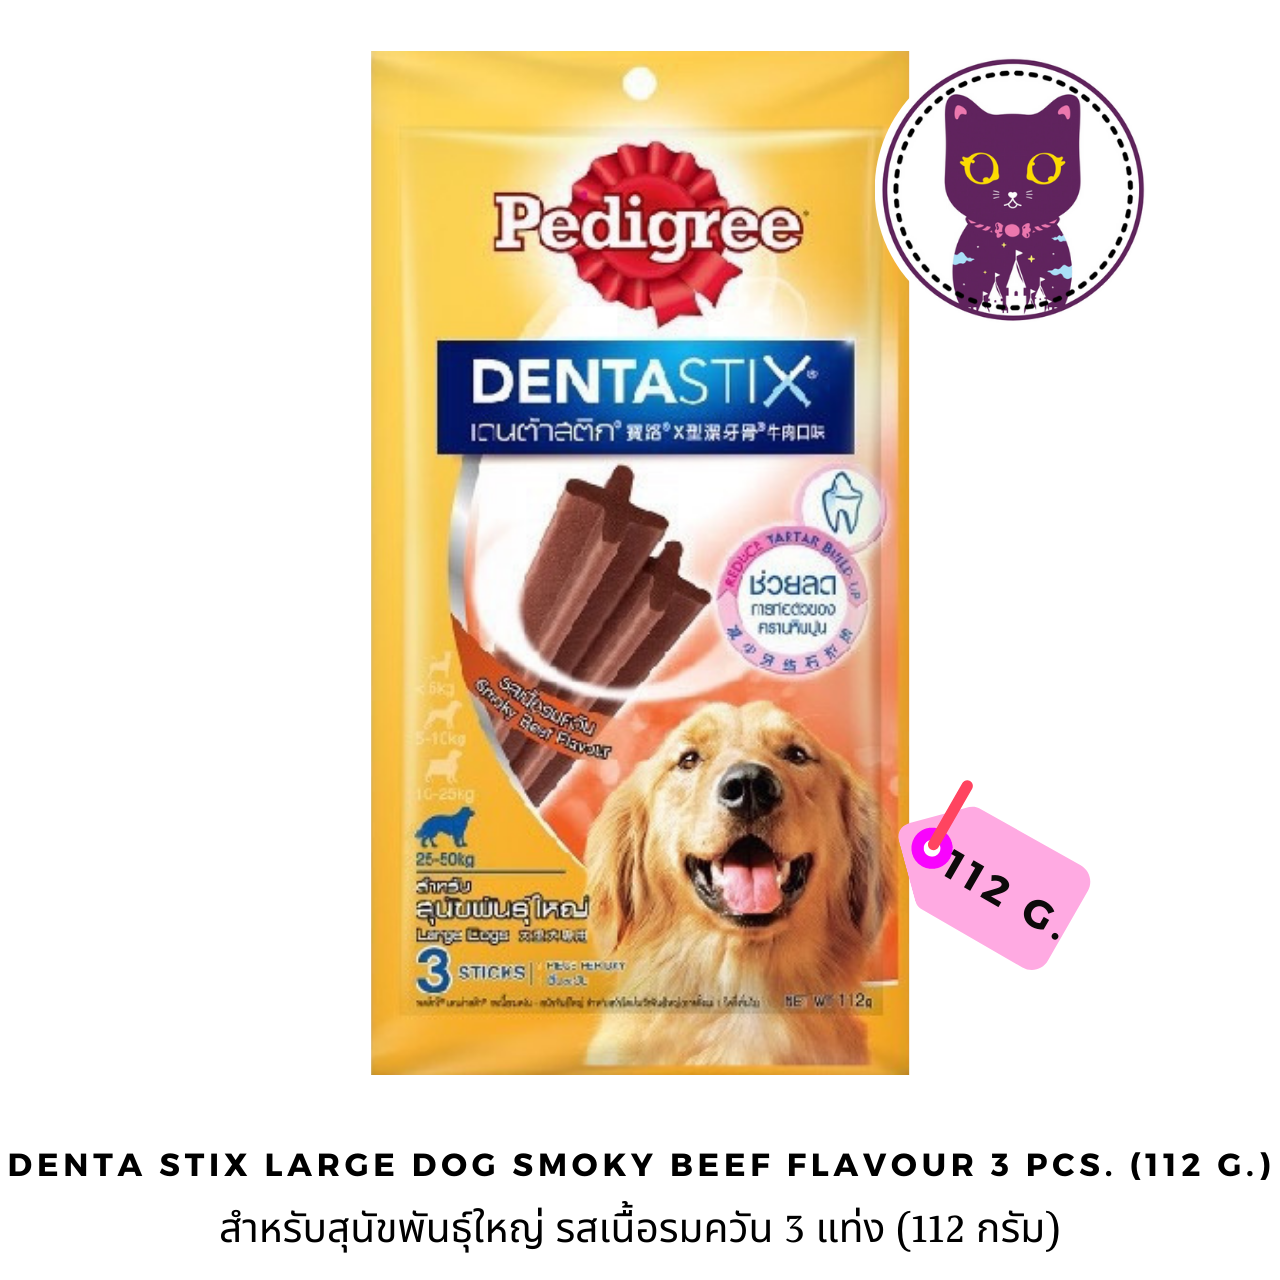 [WSP] Pedigree Denta Stix Smoky Beef Flavor (Large Dogs) เพ็ดดิกรี ขนมขัดฟันสุนัขรูปตัว X สำหรับสุนัขพันธุ์ใหญ่ รสเนื้อรมควัน 3 แท่ง